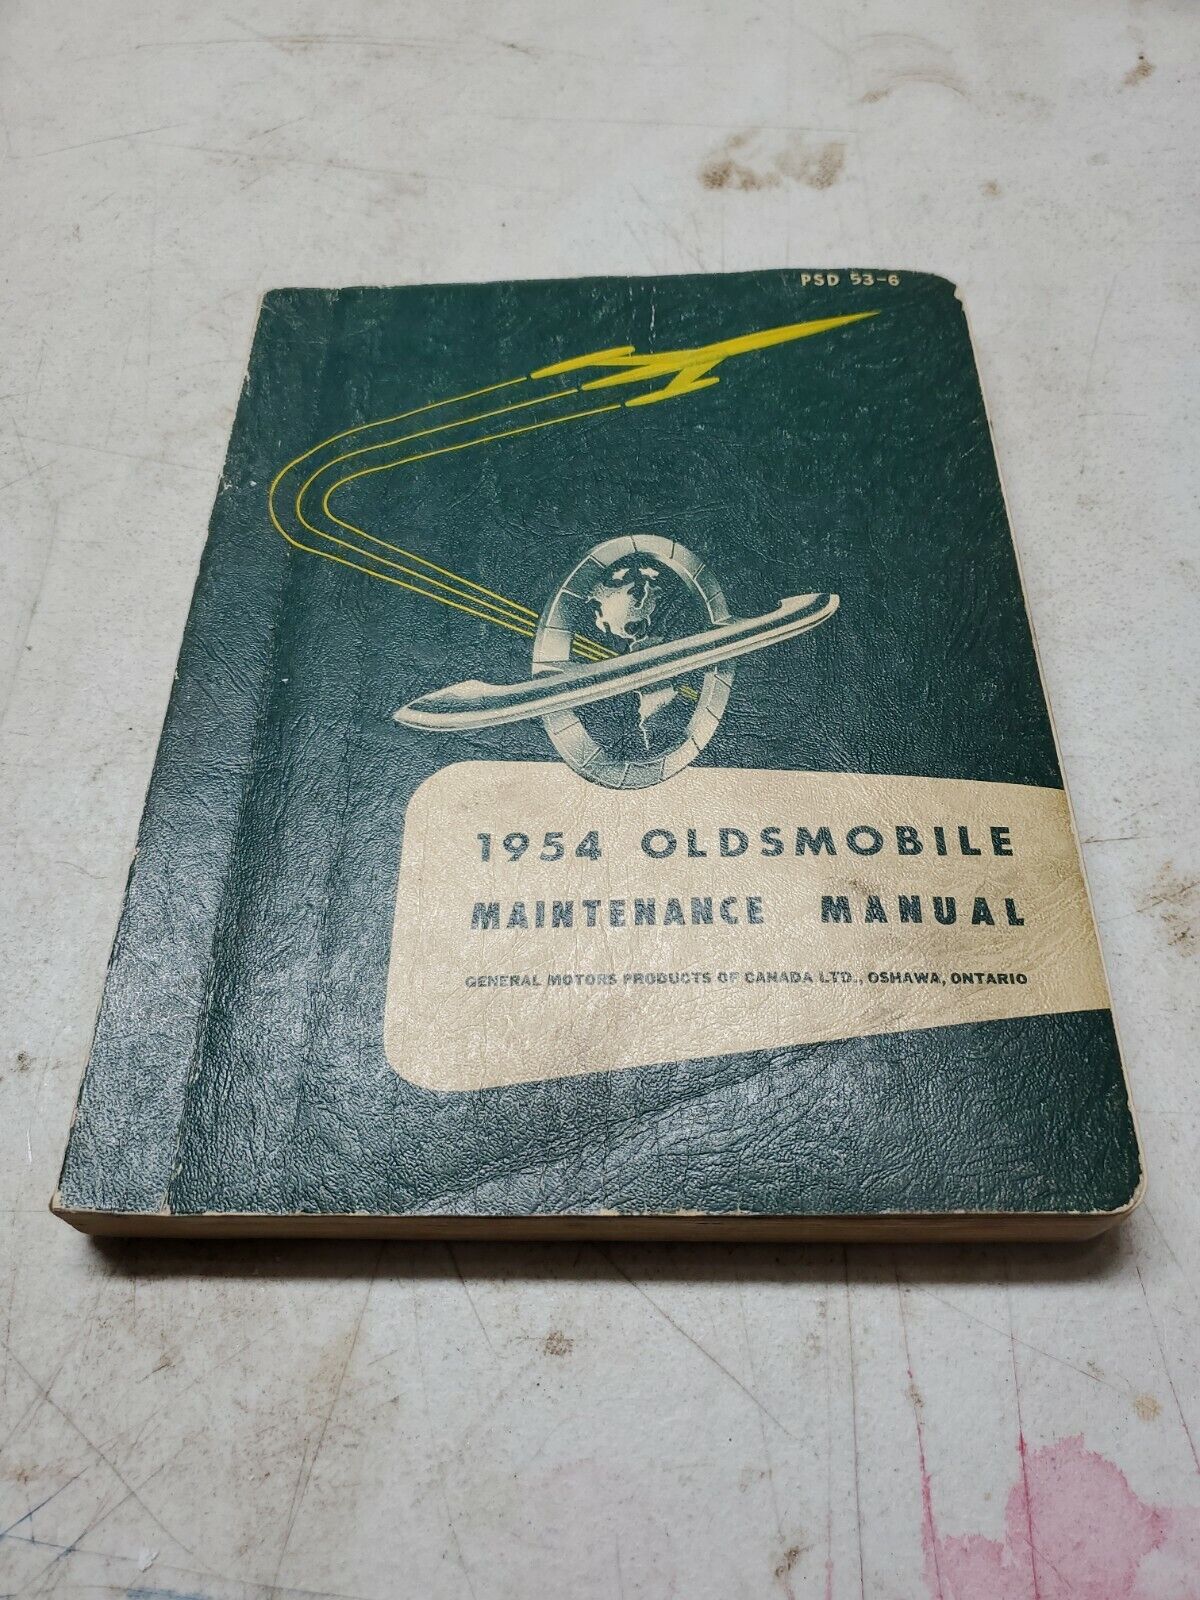 1954 Oldsmobile Maintenance Manual PSD 53-6 Vintage General Motors